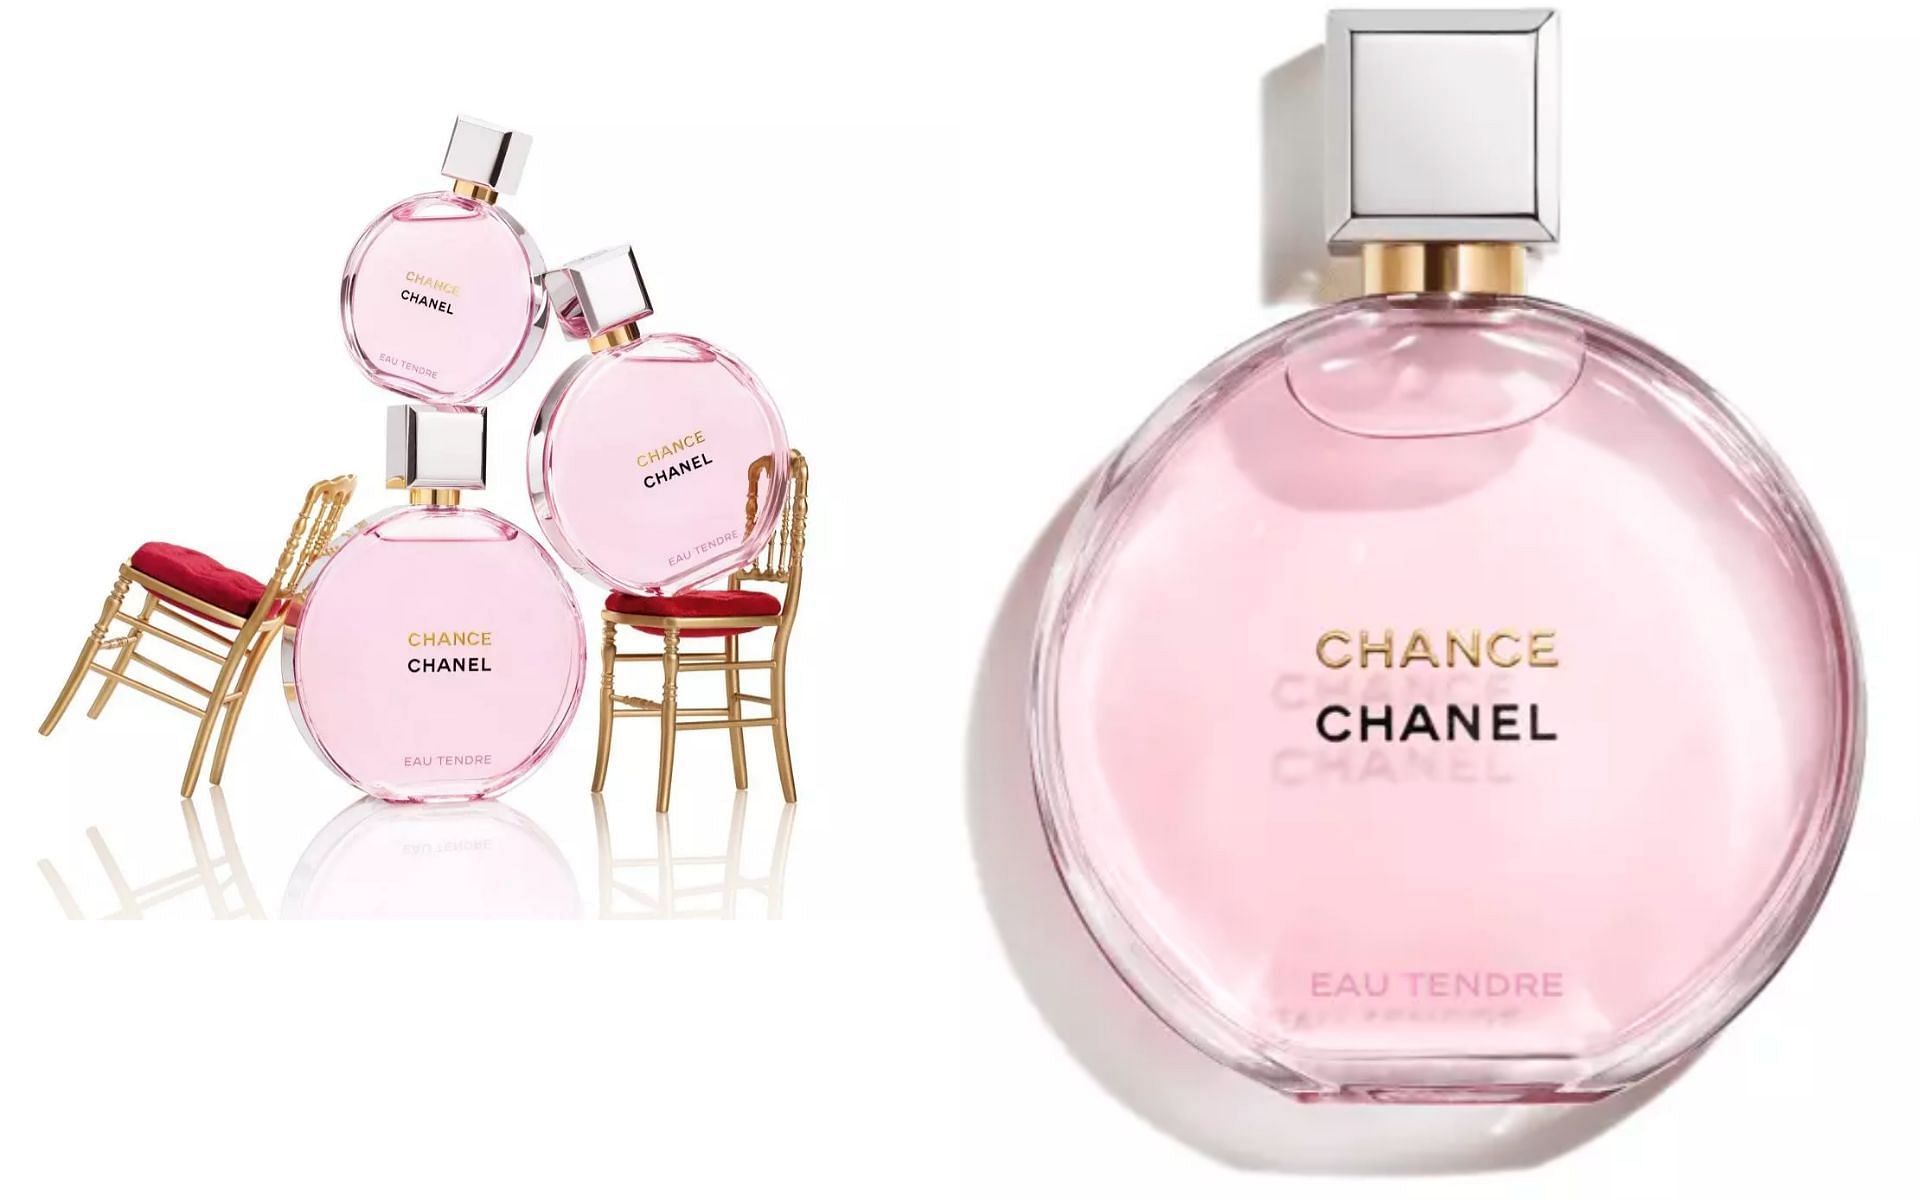 CHANCE EAU TENDRE fragrance by Chanel (Image via chanel.com)